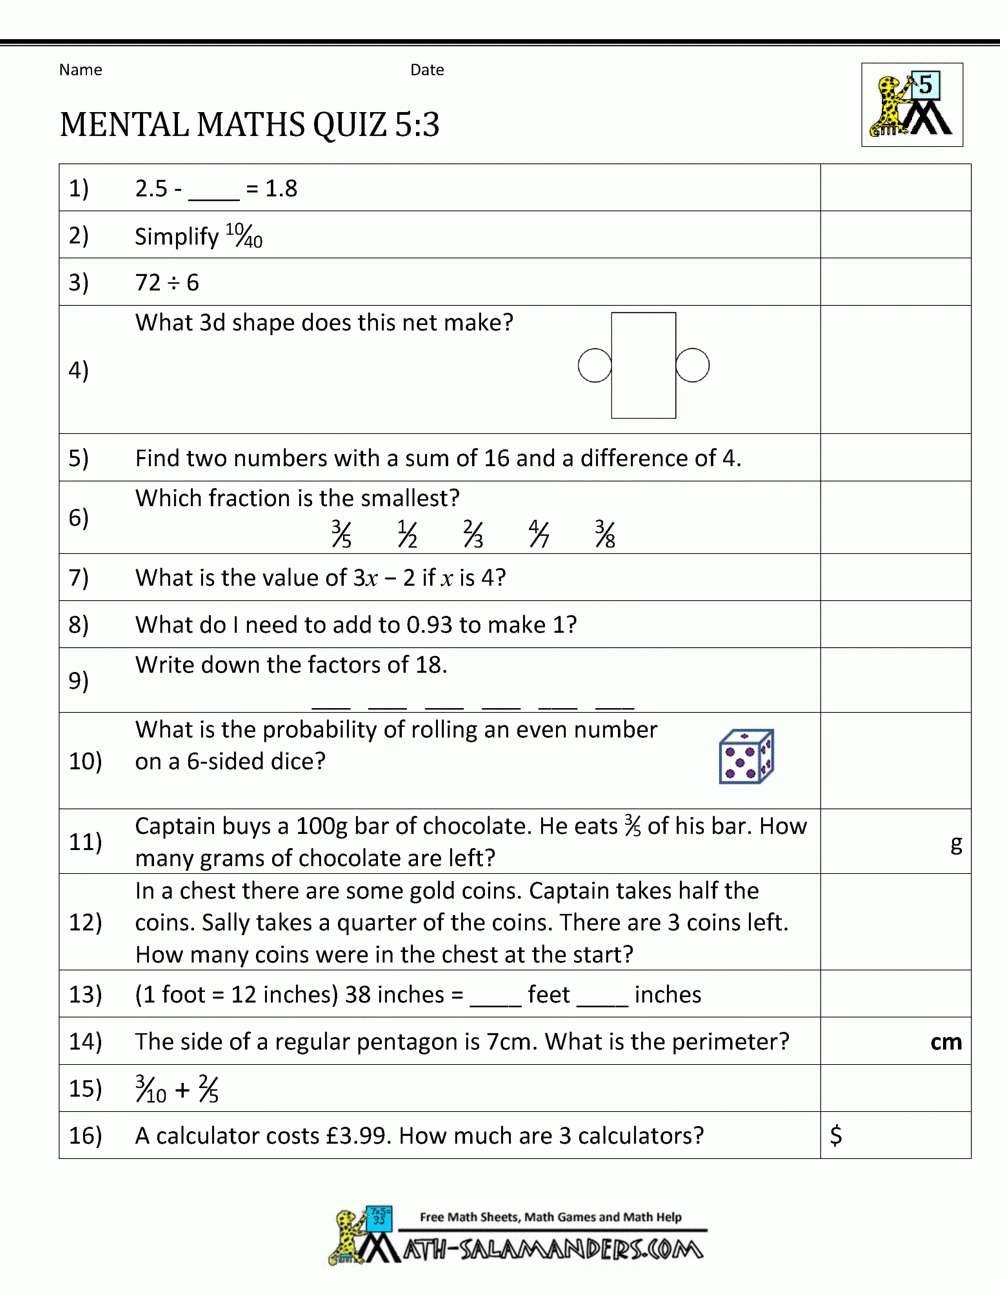 Mental Maths Practise Year 5 Worksheets regarding Multiplication Worksheets Year 5 Australia